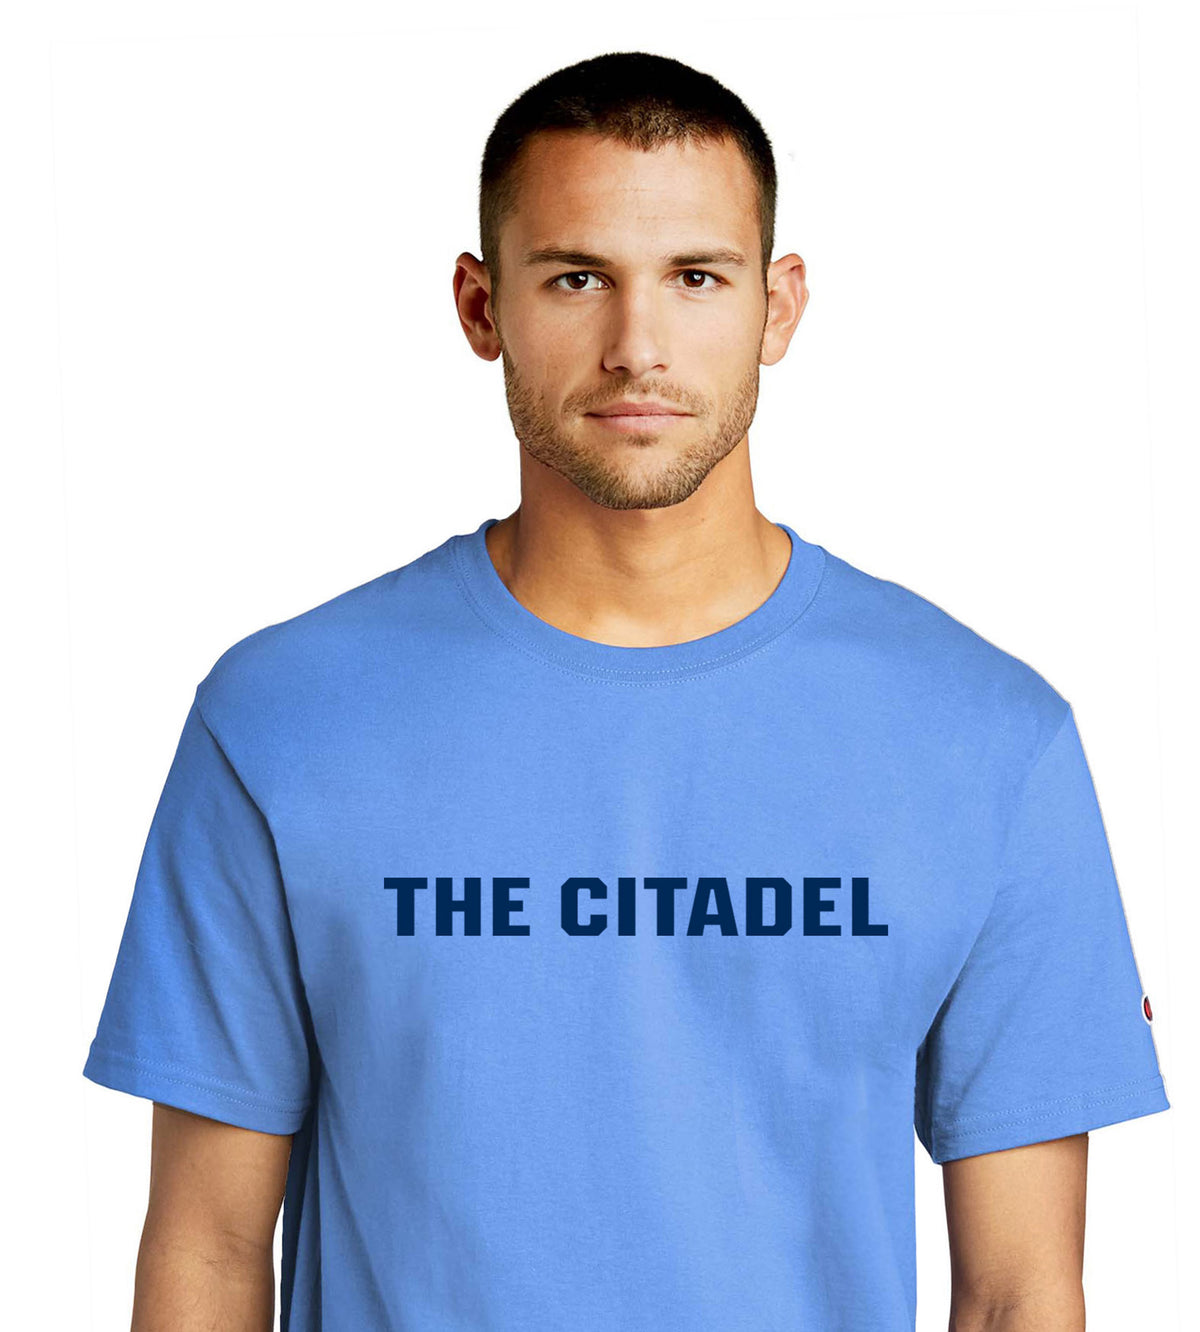 The Citadel, Champion brand Tee shirt-Carolina Blue